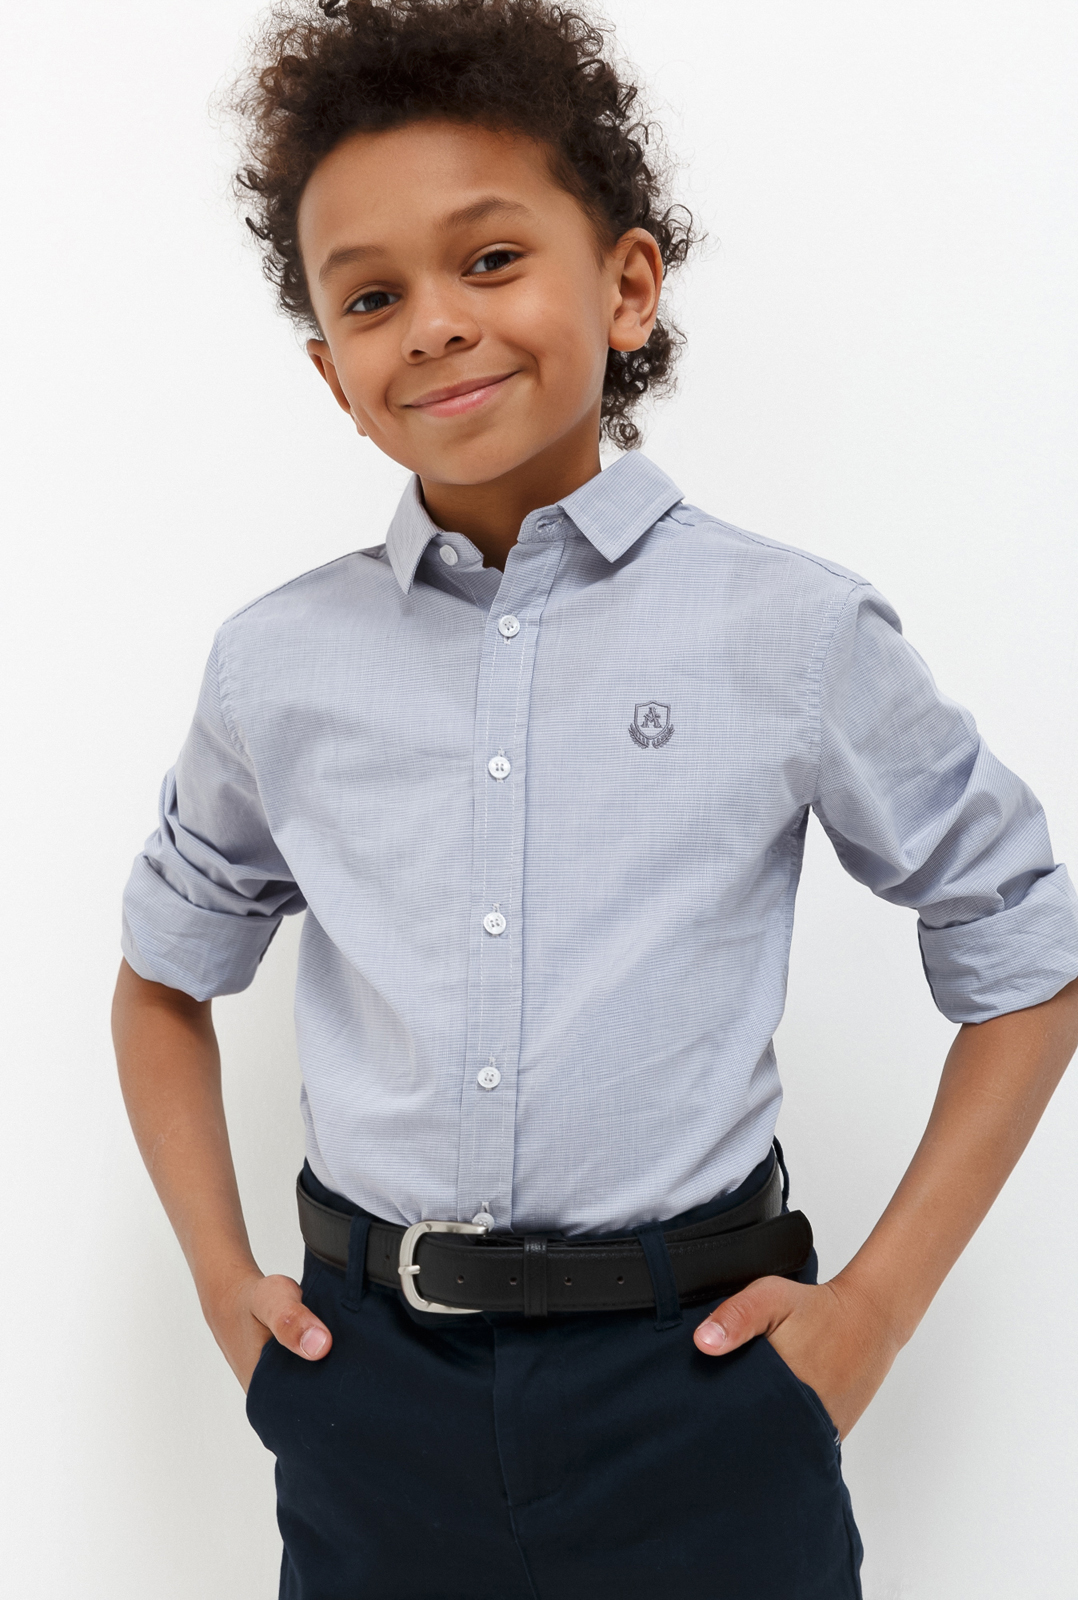 Рубашка для мальчика Acoola Lincoln, цвет: светло-серый. 20140280035_1800. Размер 122